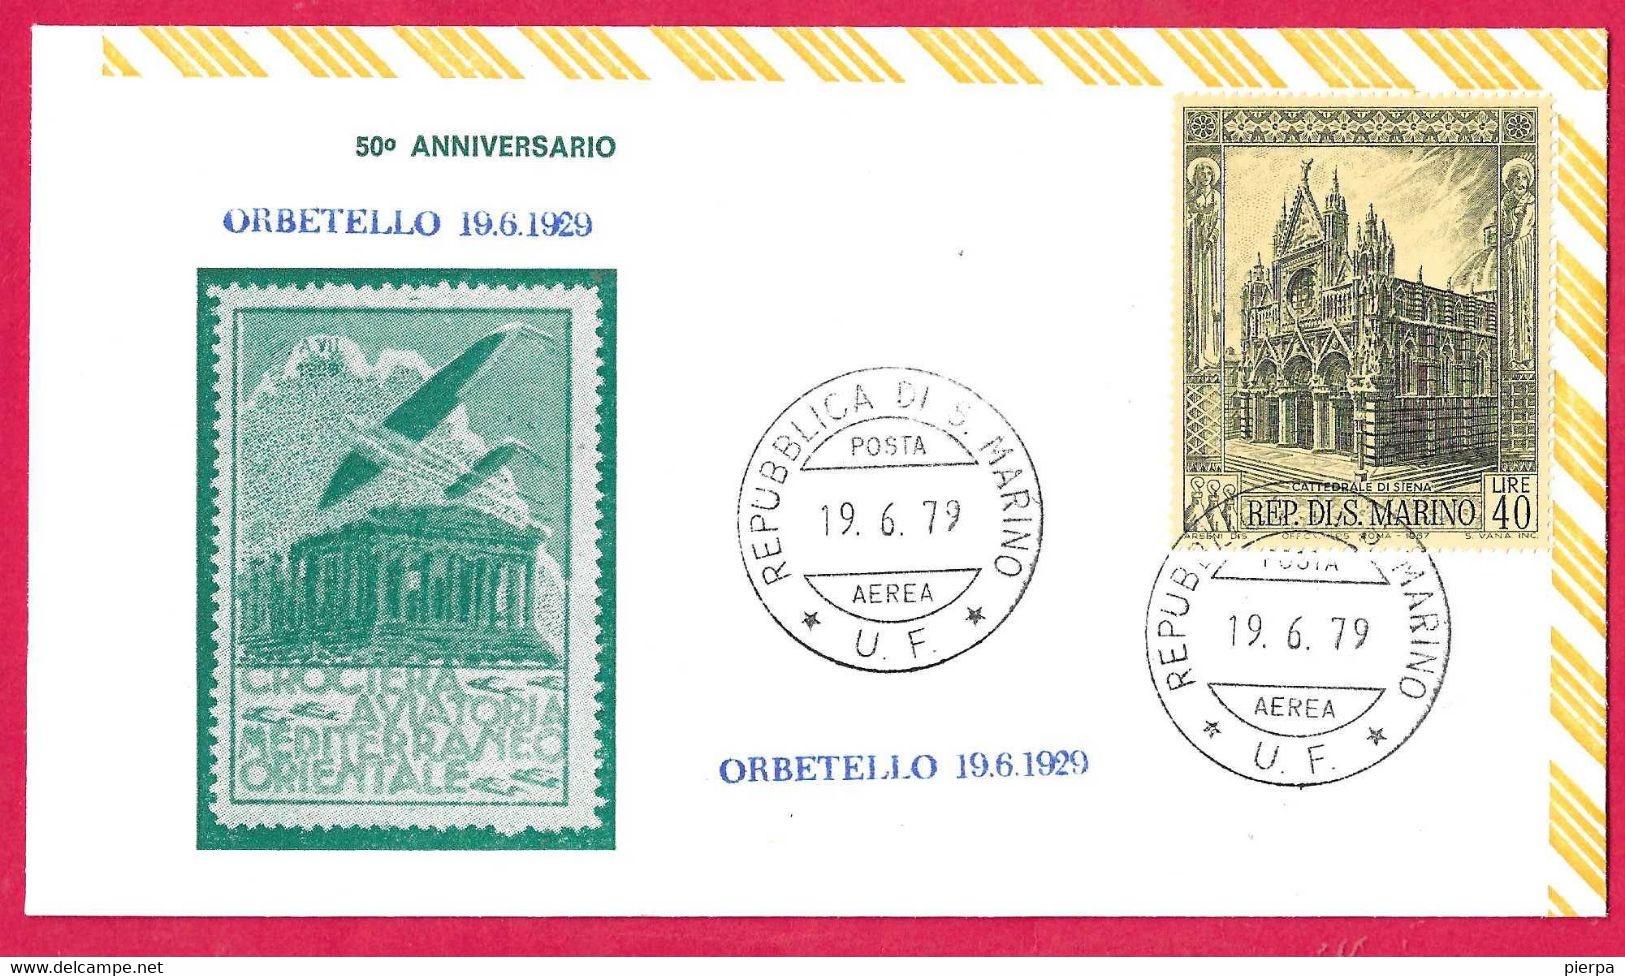 SAN MARINO - BUSTA COMMEMORATIVA 50° CROCIERA AVIATORIA MEDITERRANEO ORIENTALE * 19.GIU.1979* ORBETELLO - Storia Postale